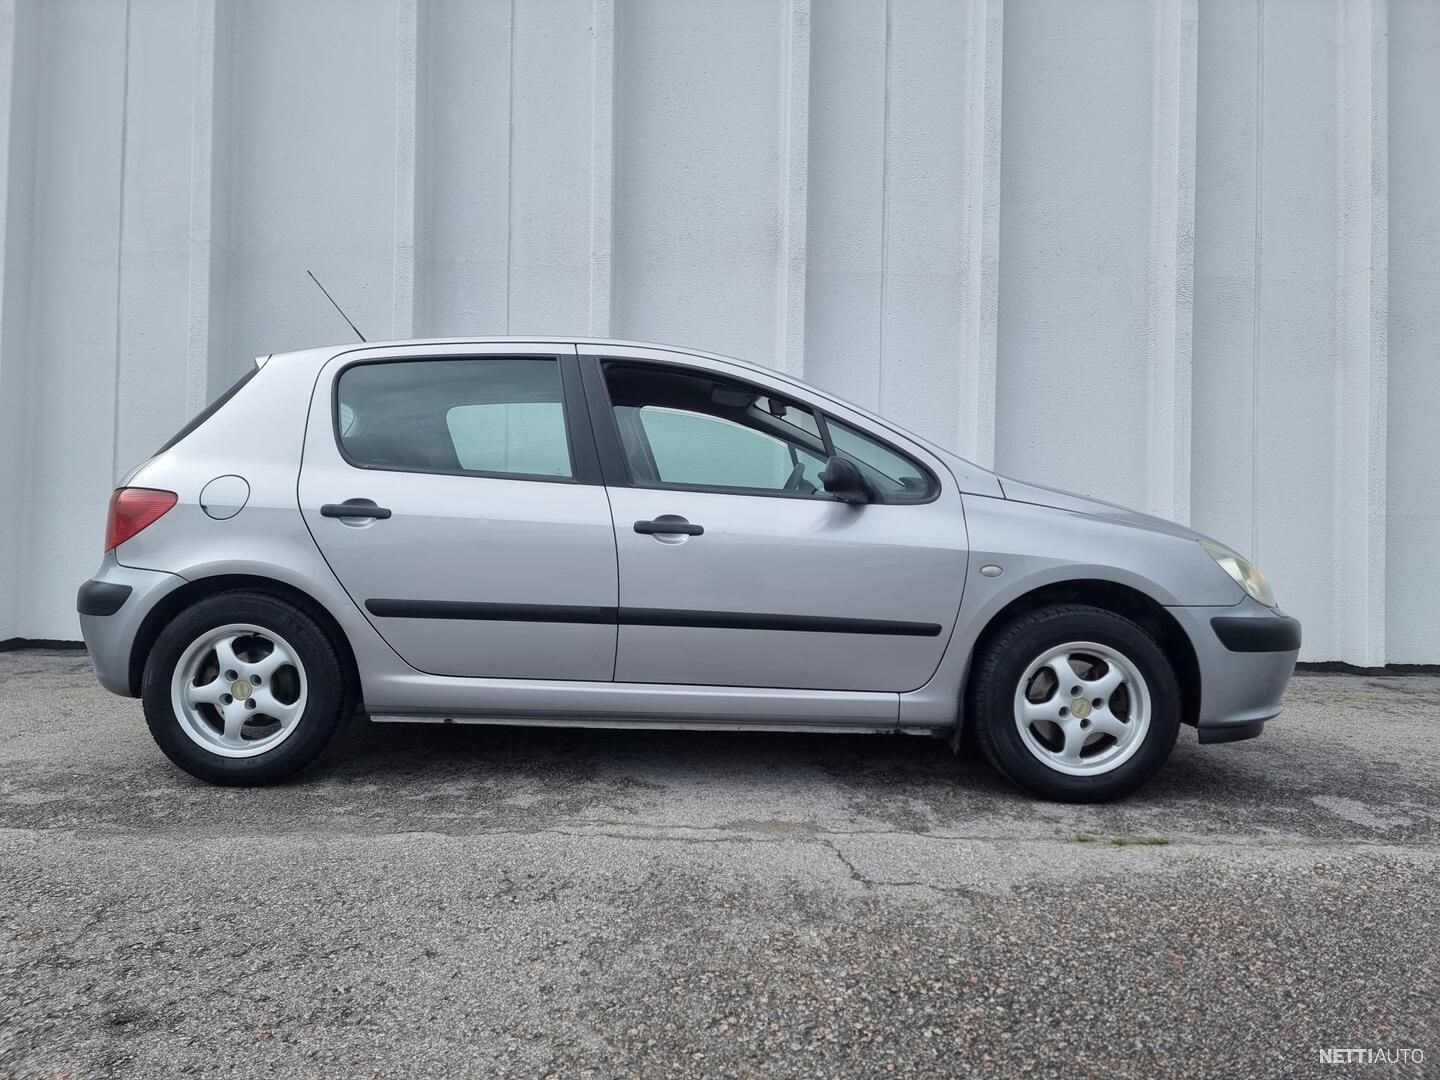 Peugeot 307 exterior - Side Profile